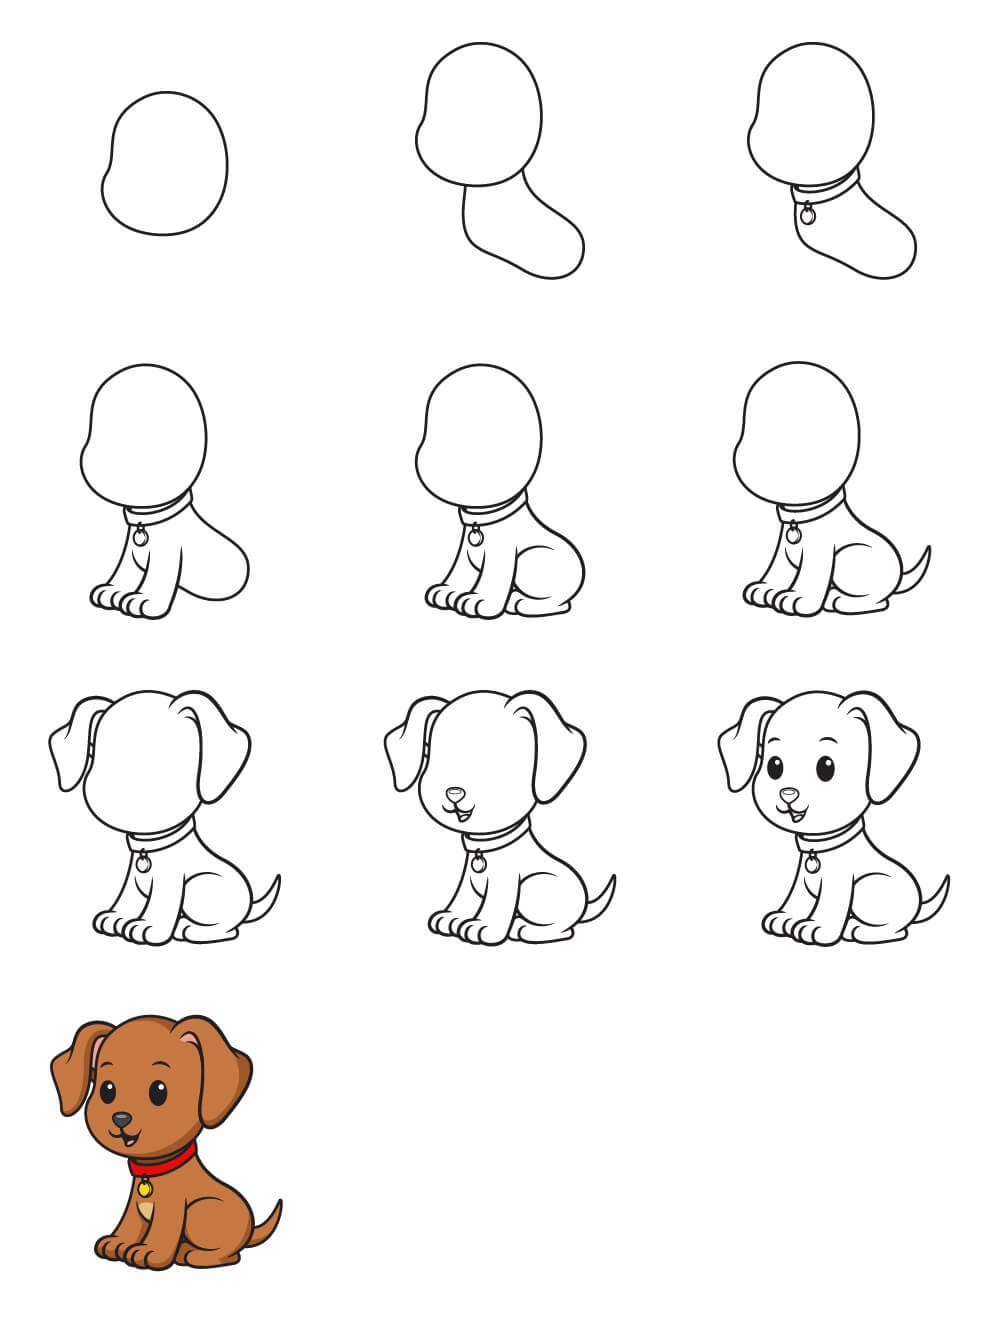 A Cute Little Dog Drawing Ideas